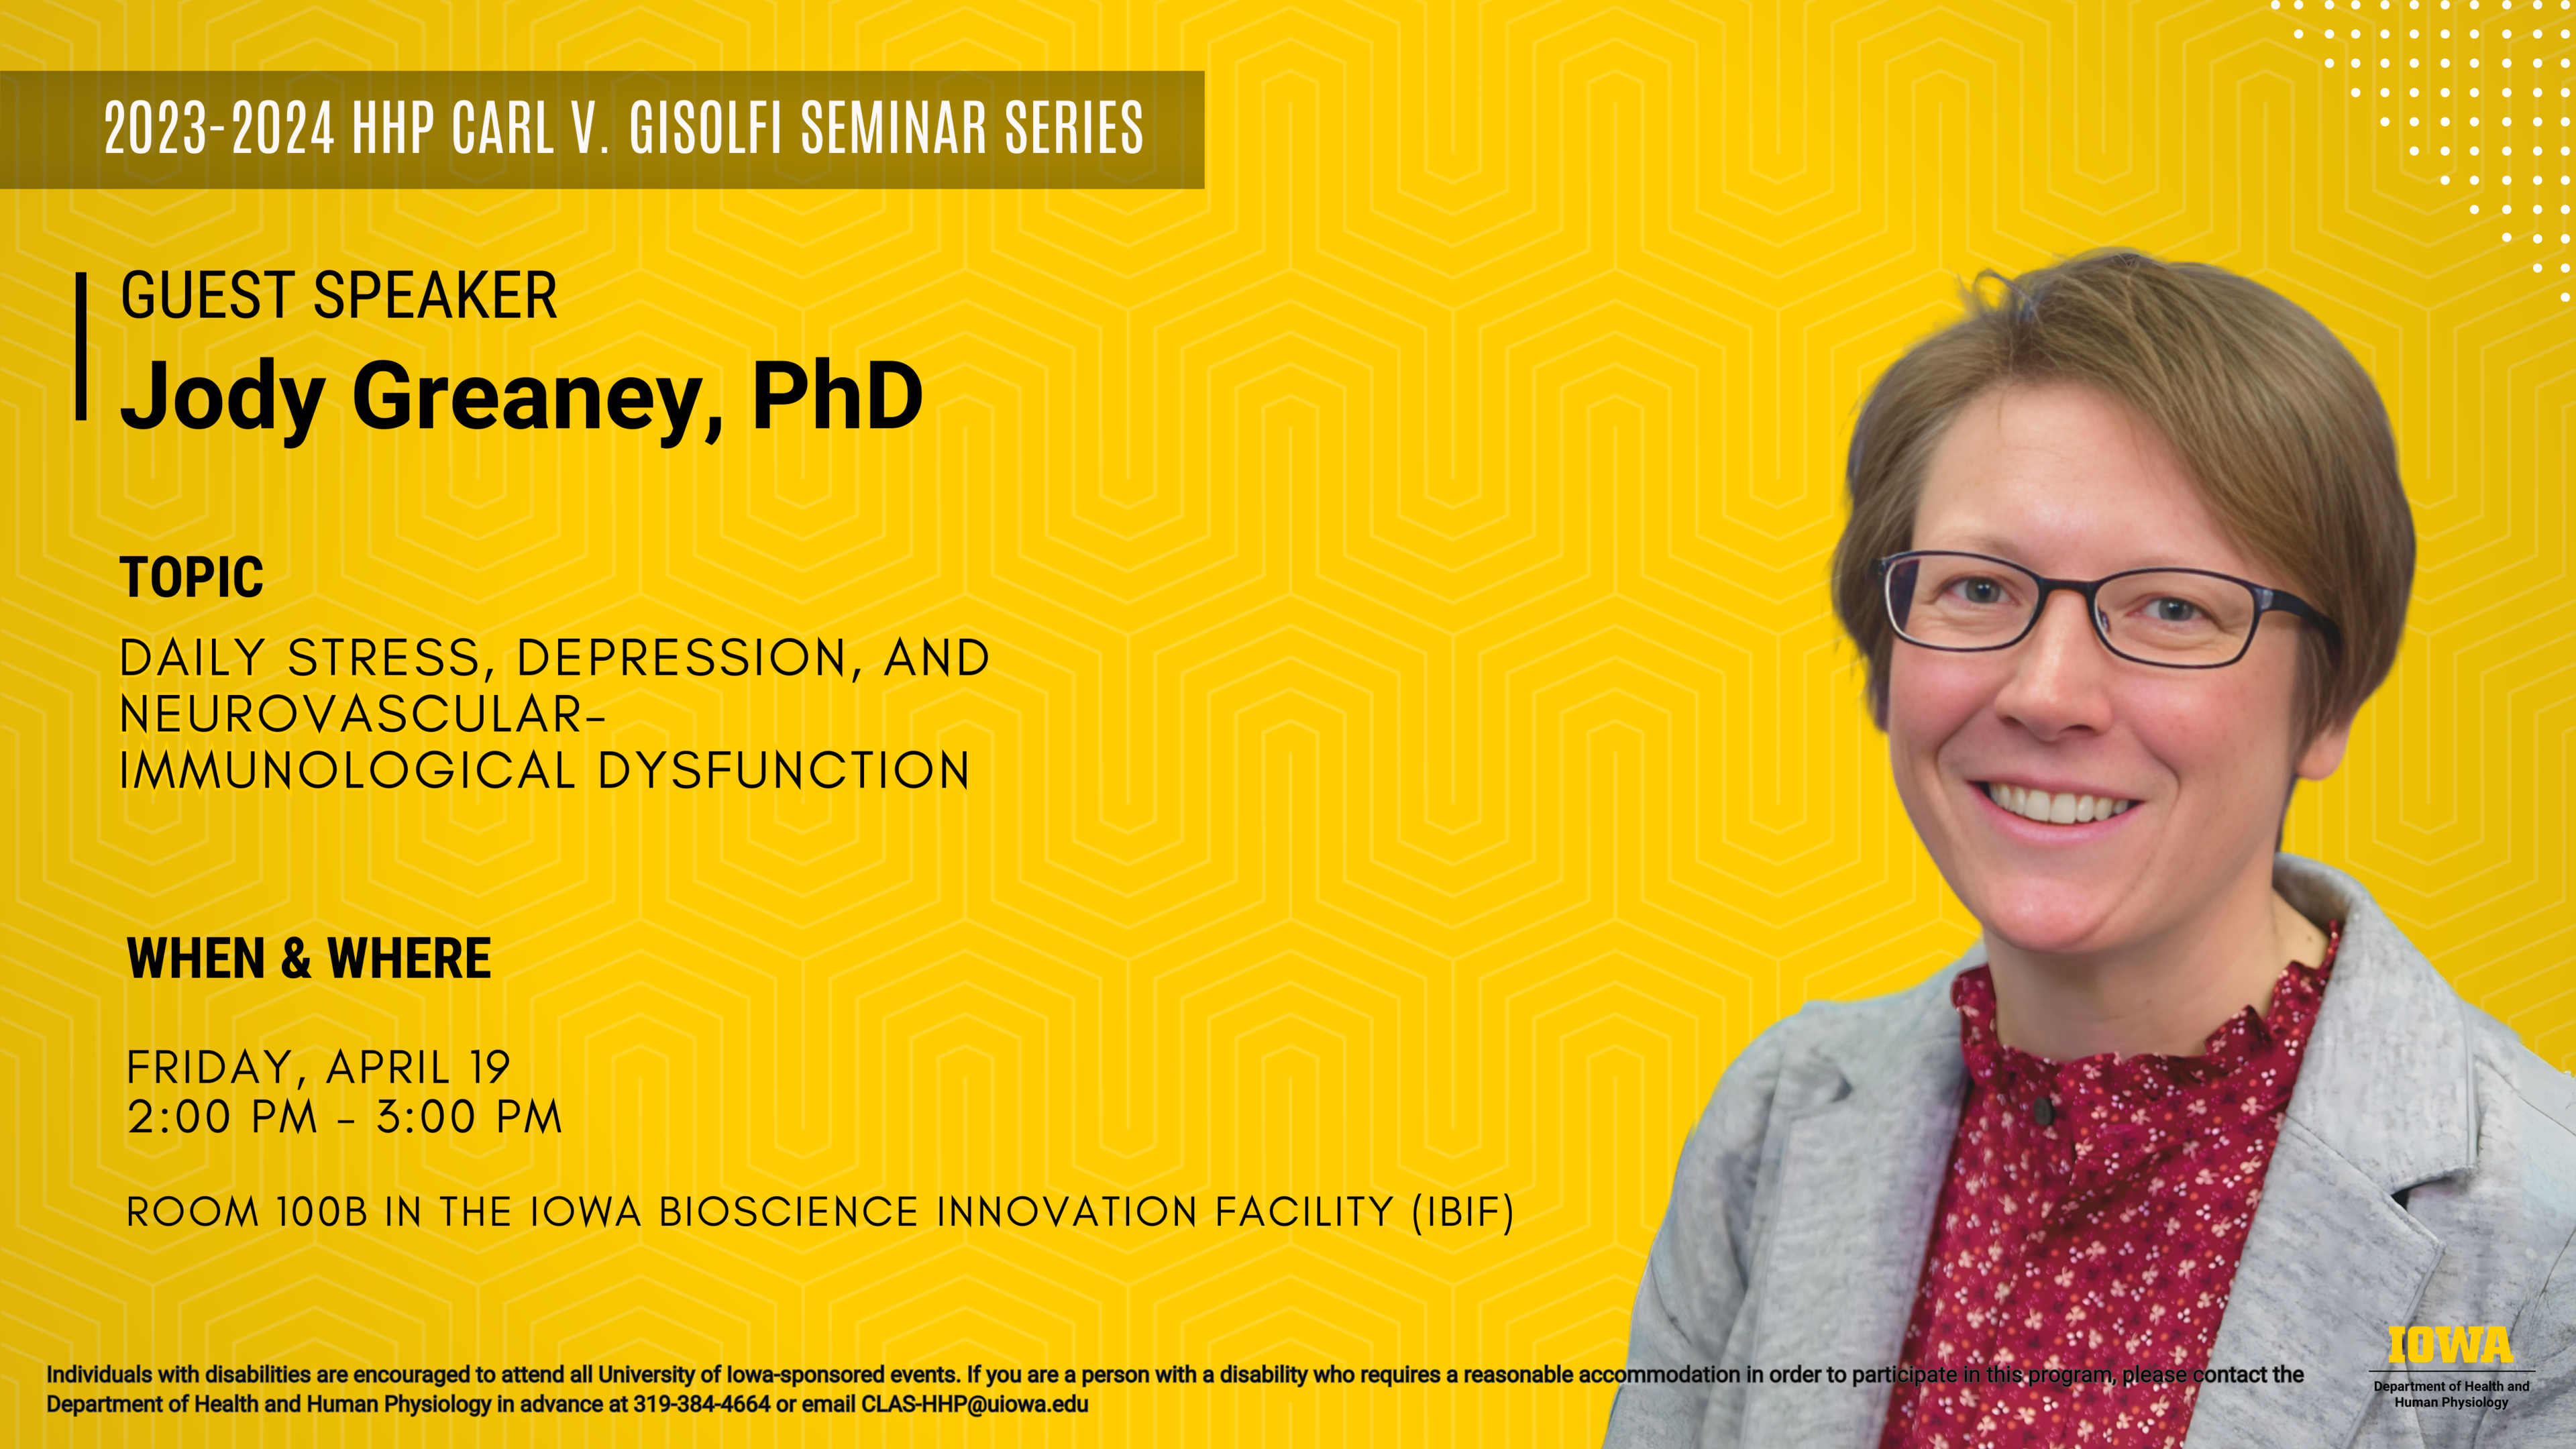 Jody Greaney, PhD Gisolfi Seminar Series April 19 from 2-3 PM